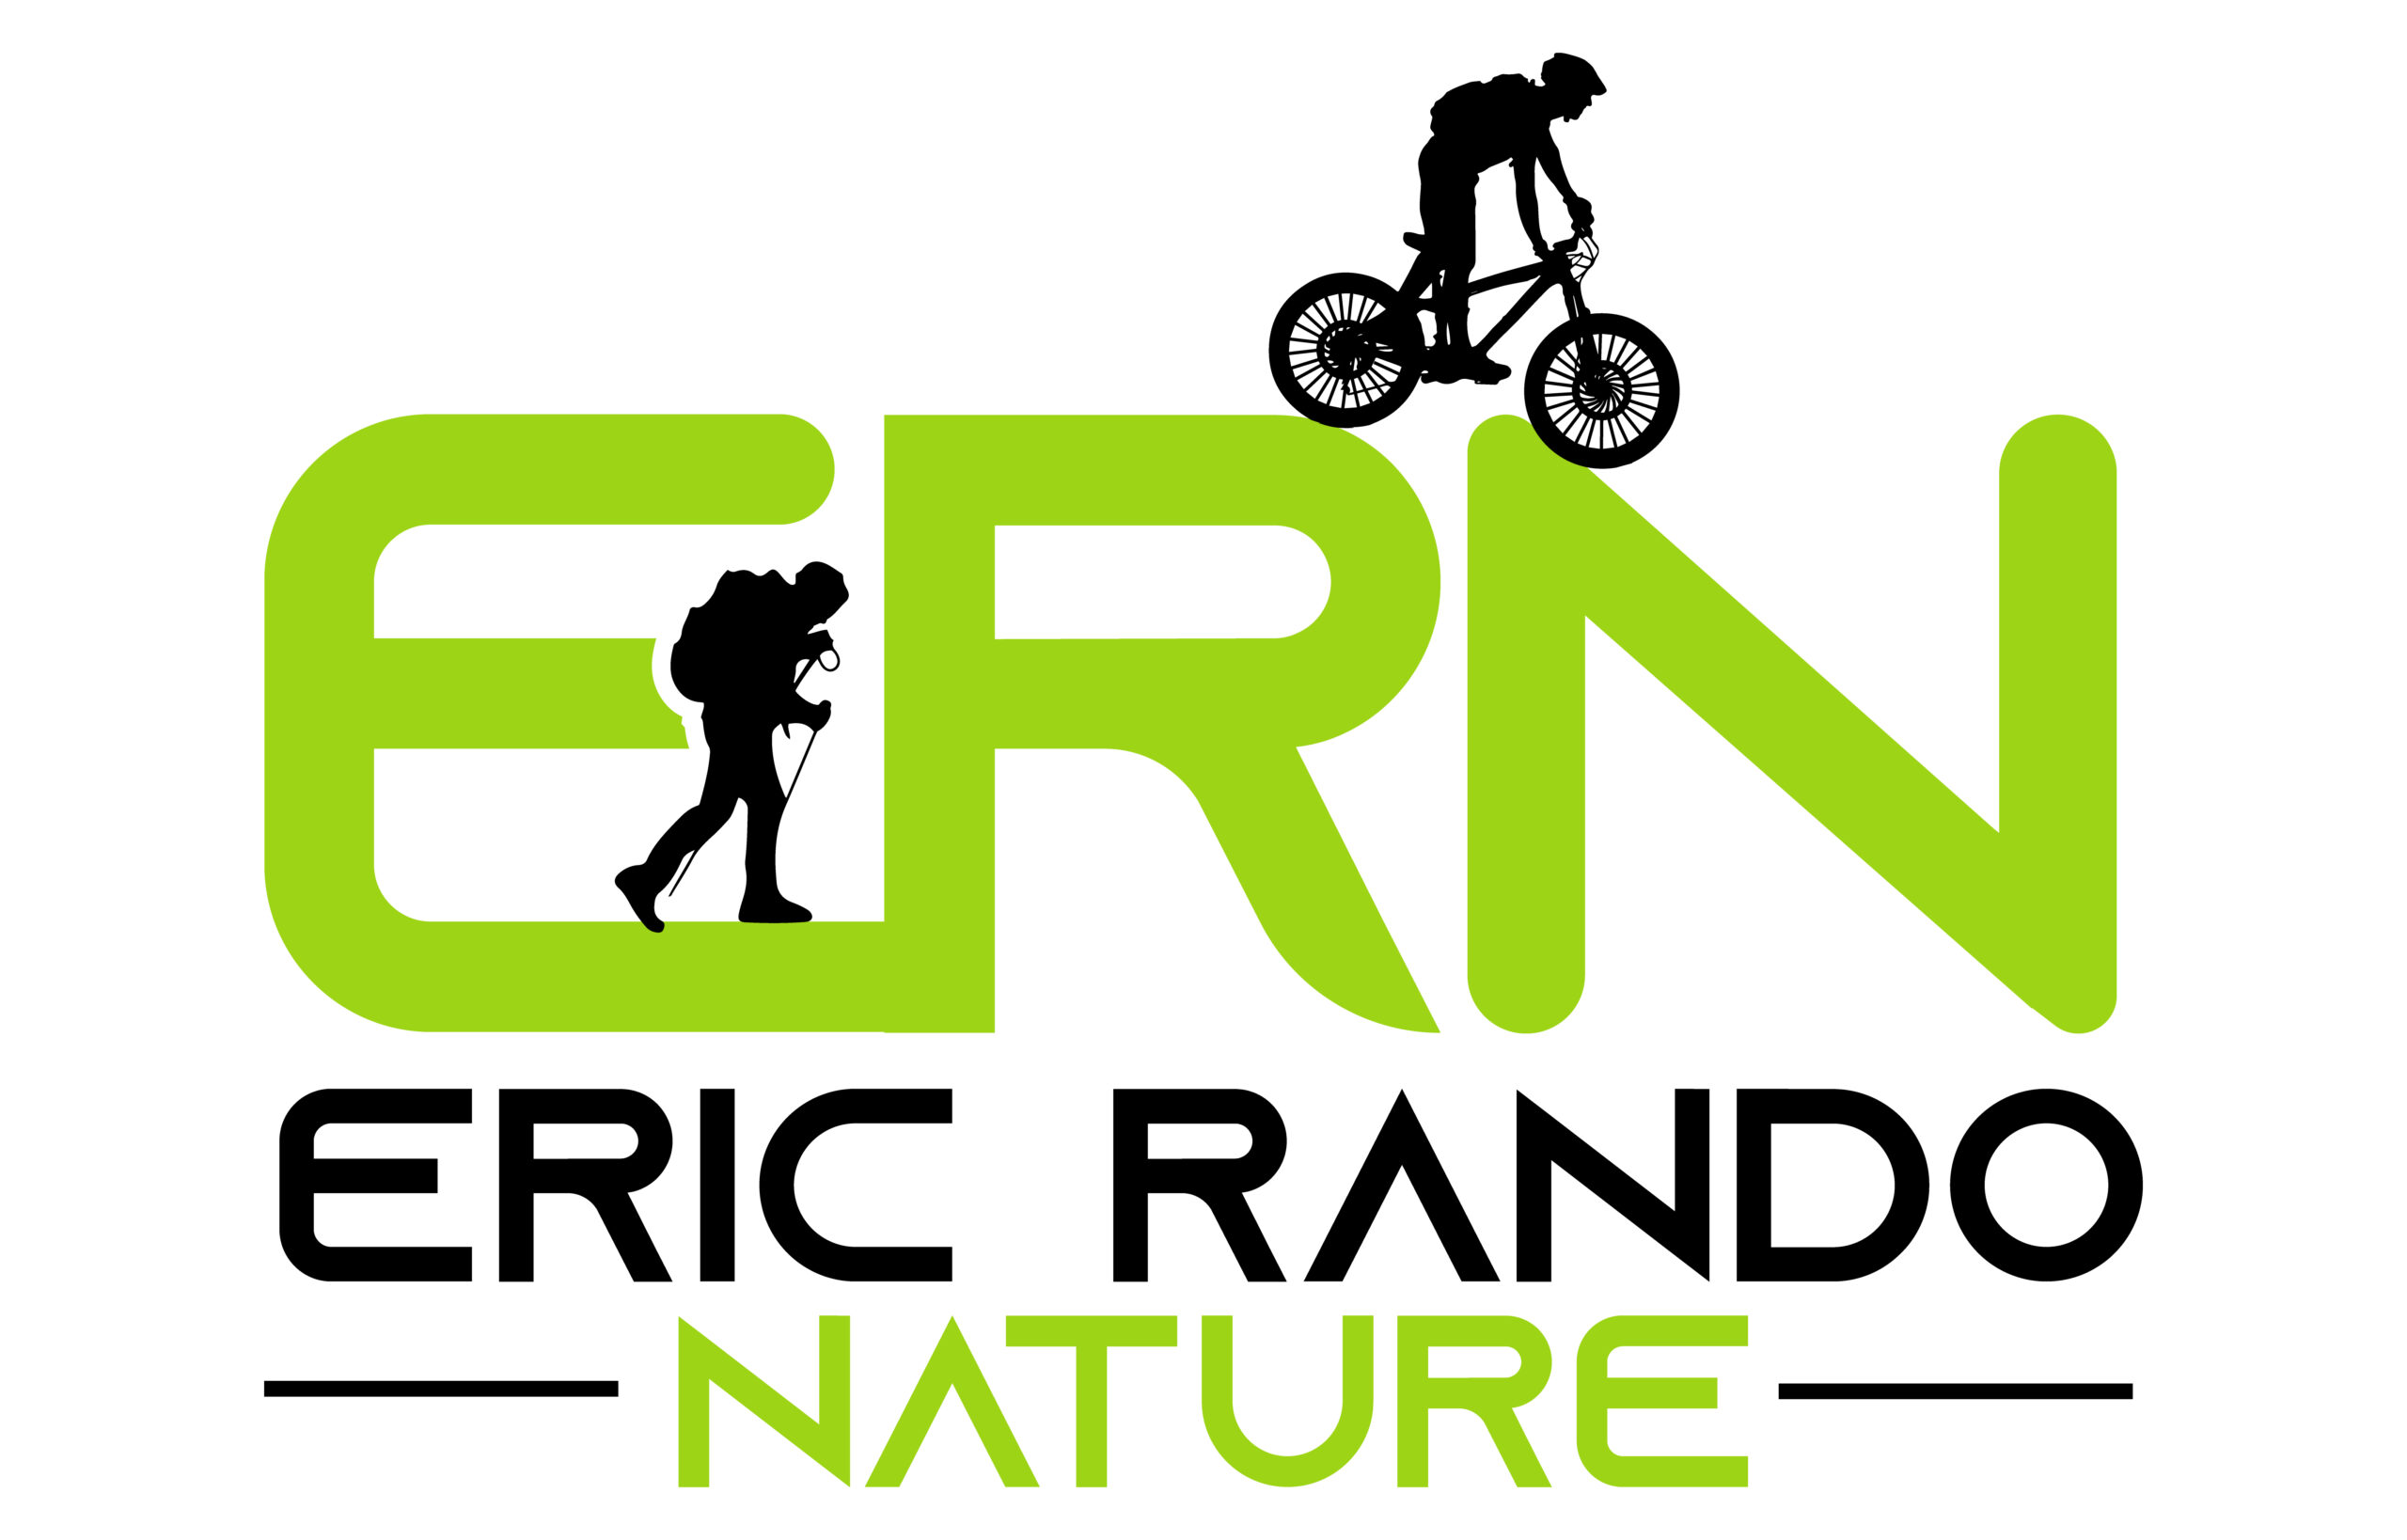 Eric Rando Nature